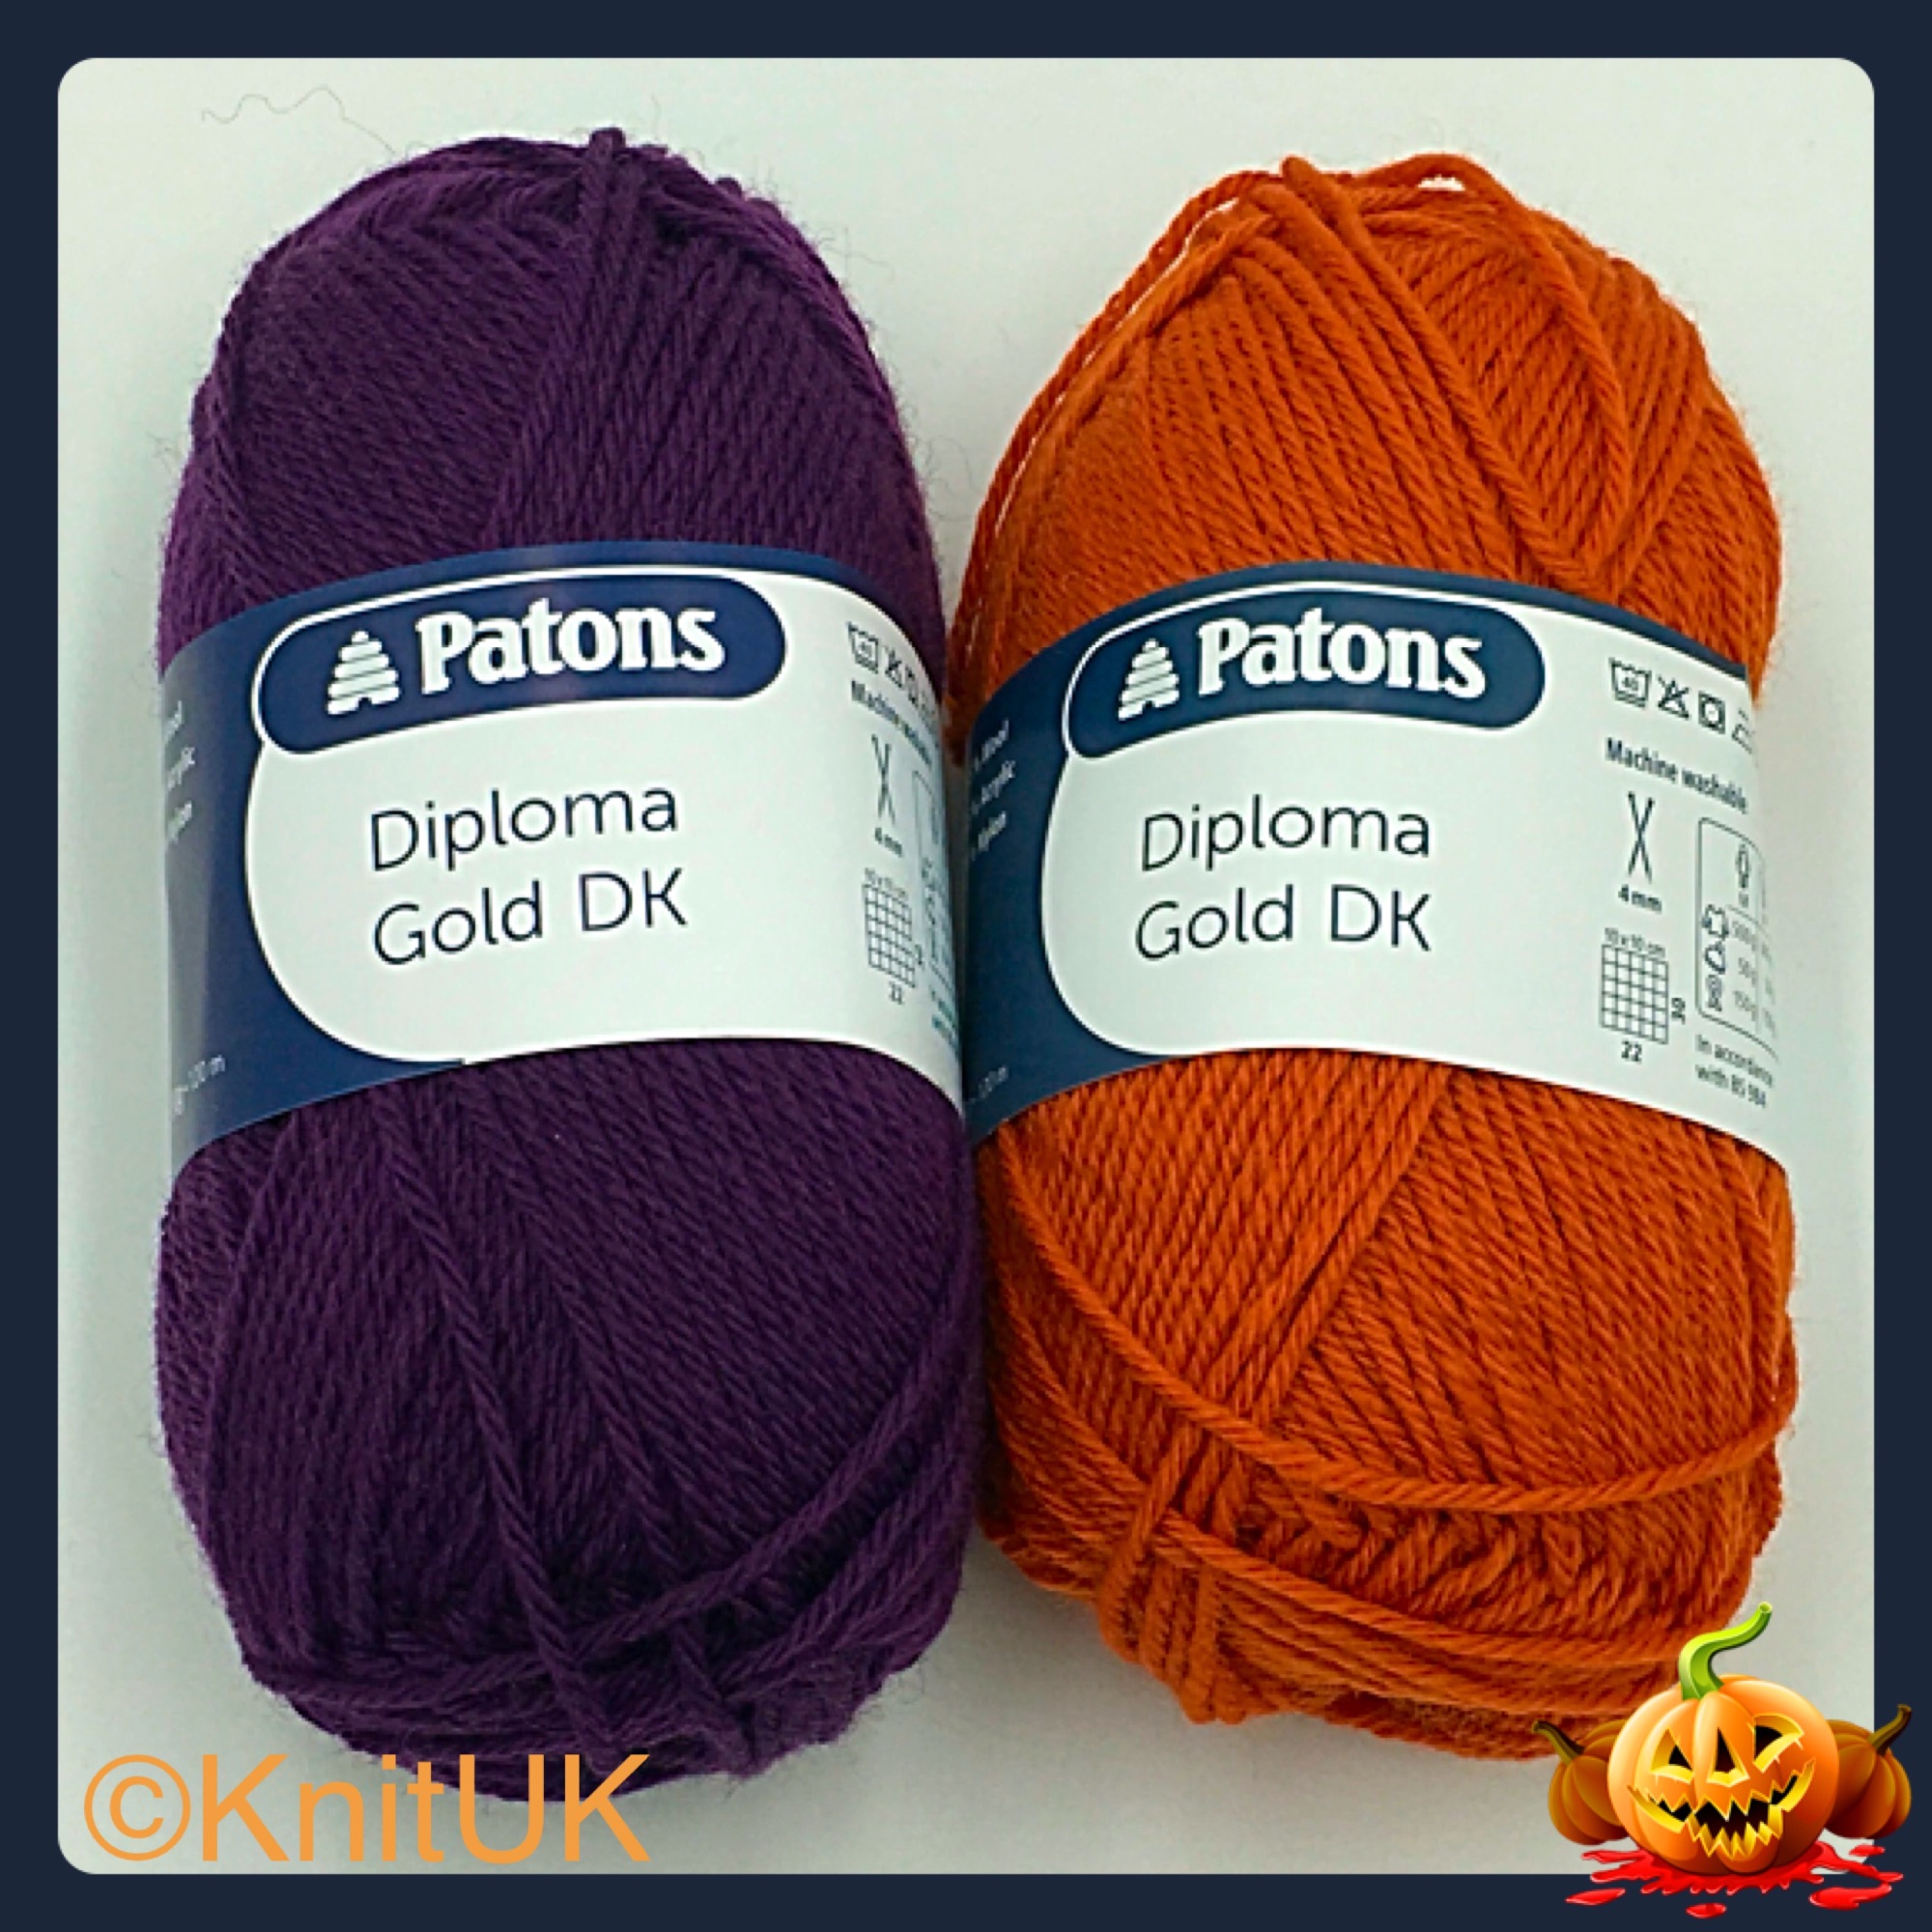 patons diploma gold dk yarn purple orange